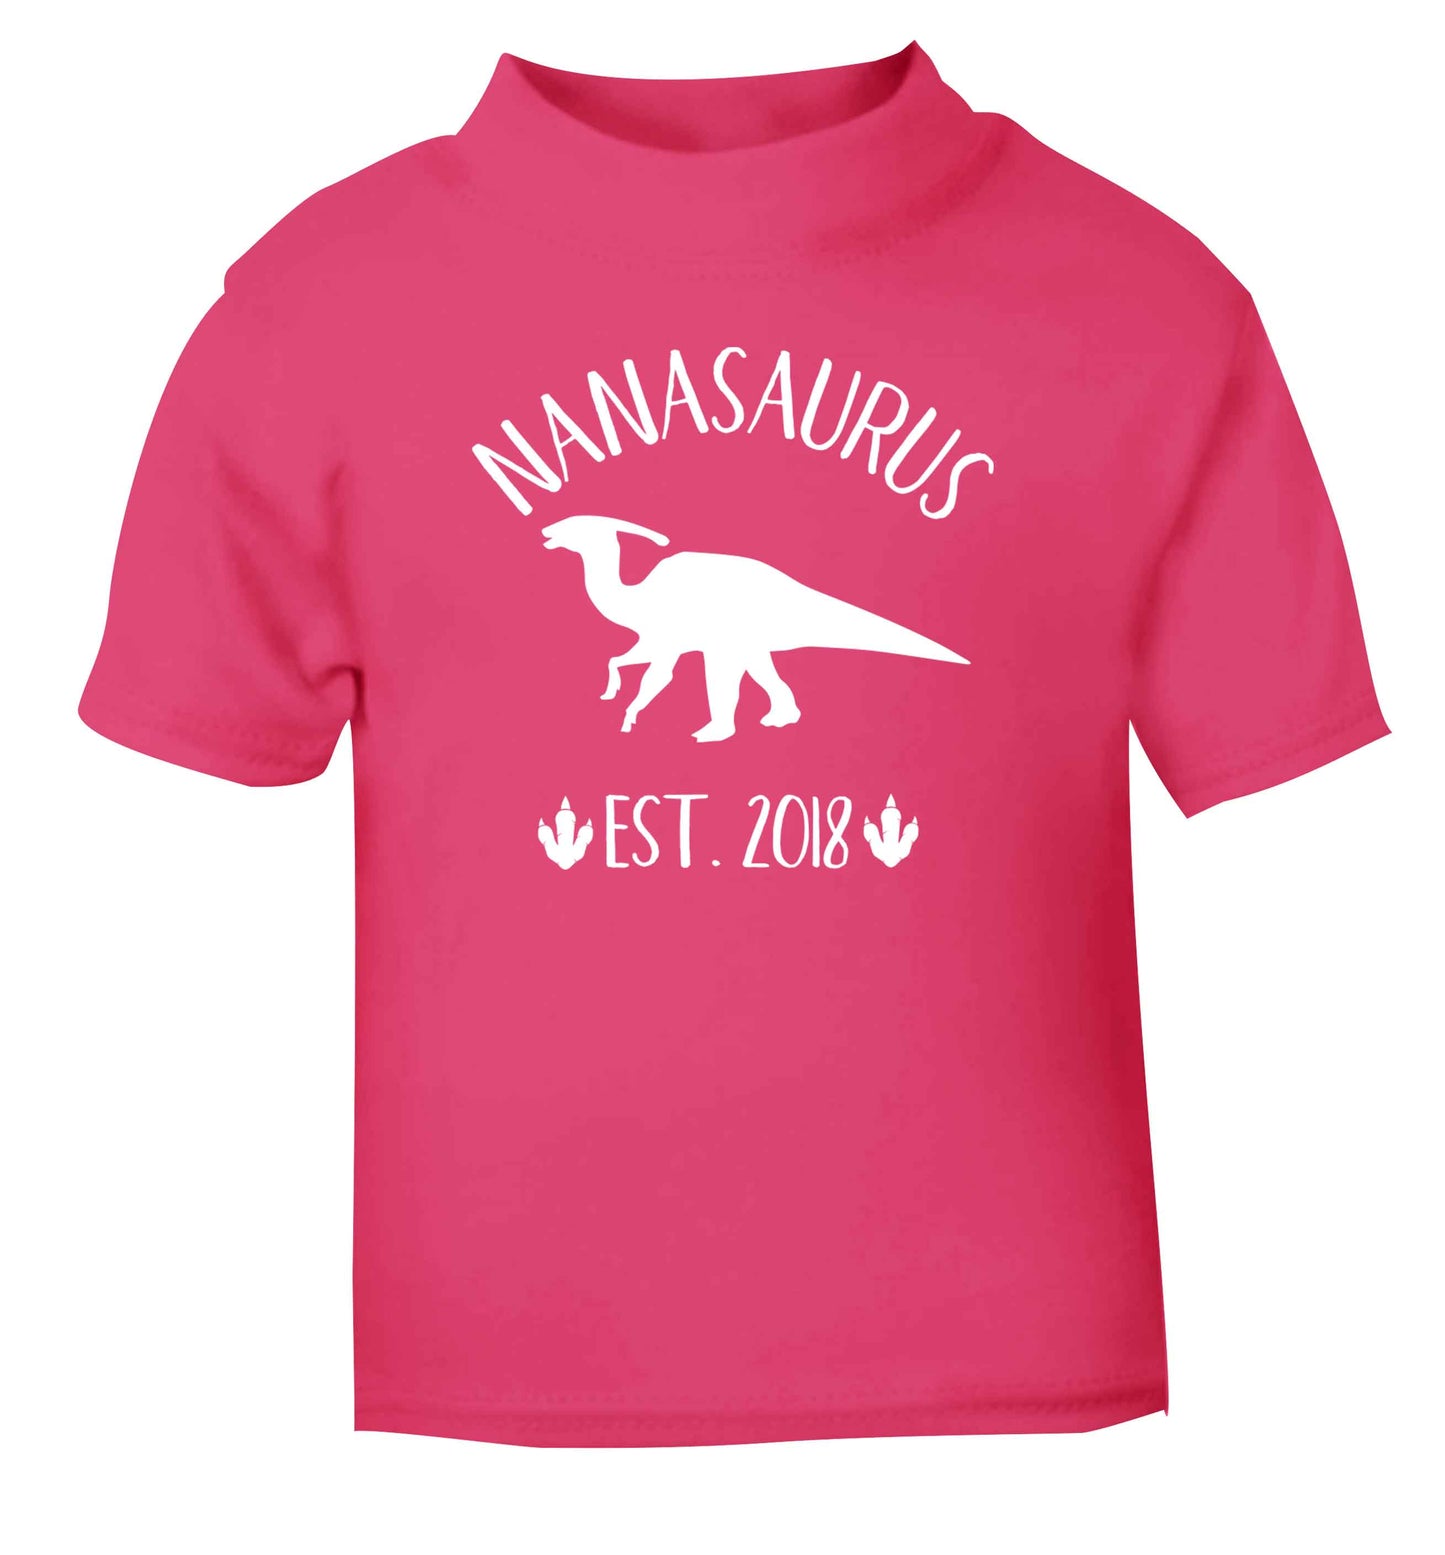 Personalised nanasaurus since (custom date) pink Baby Toddler Tshirt 2 Years